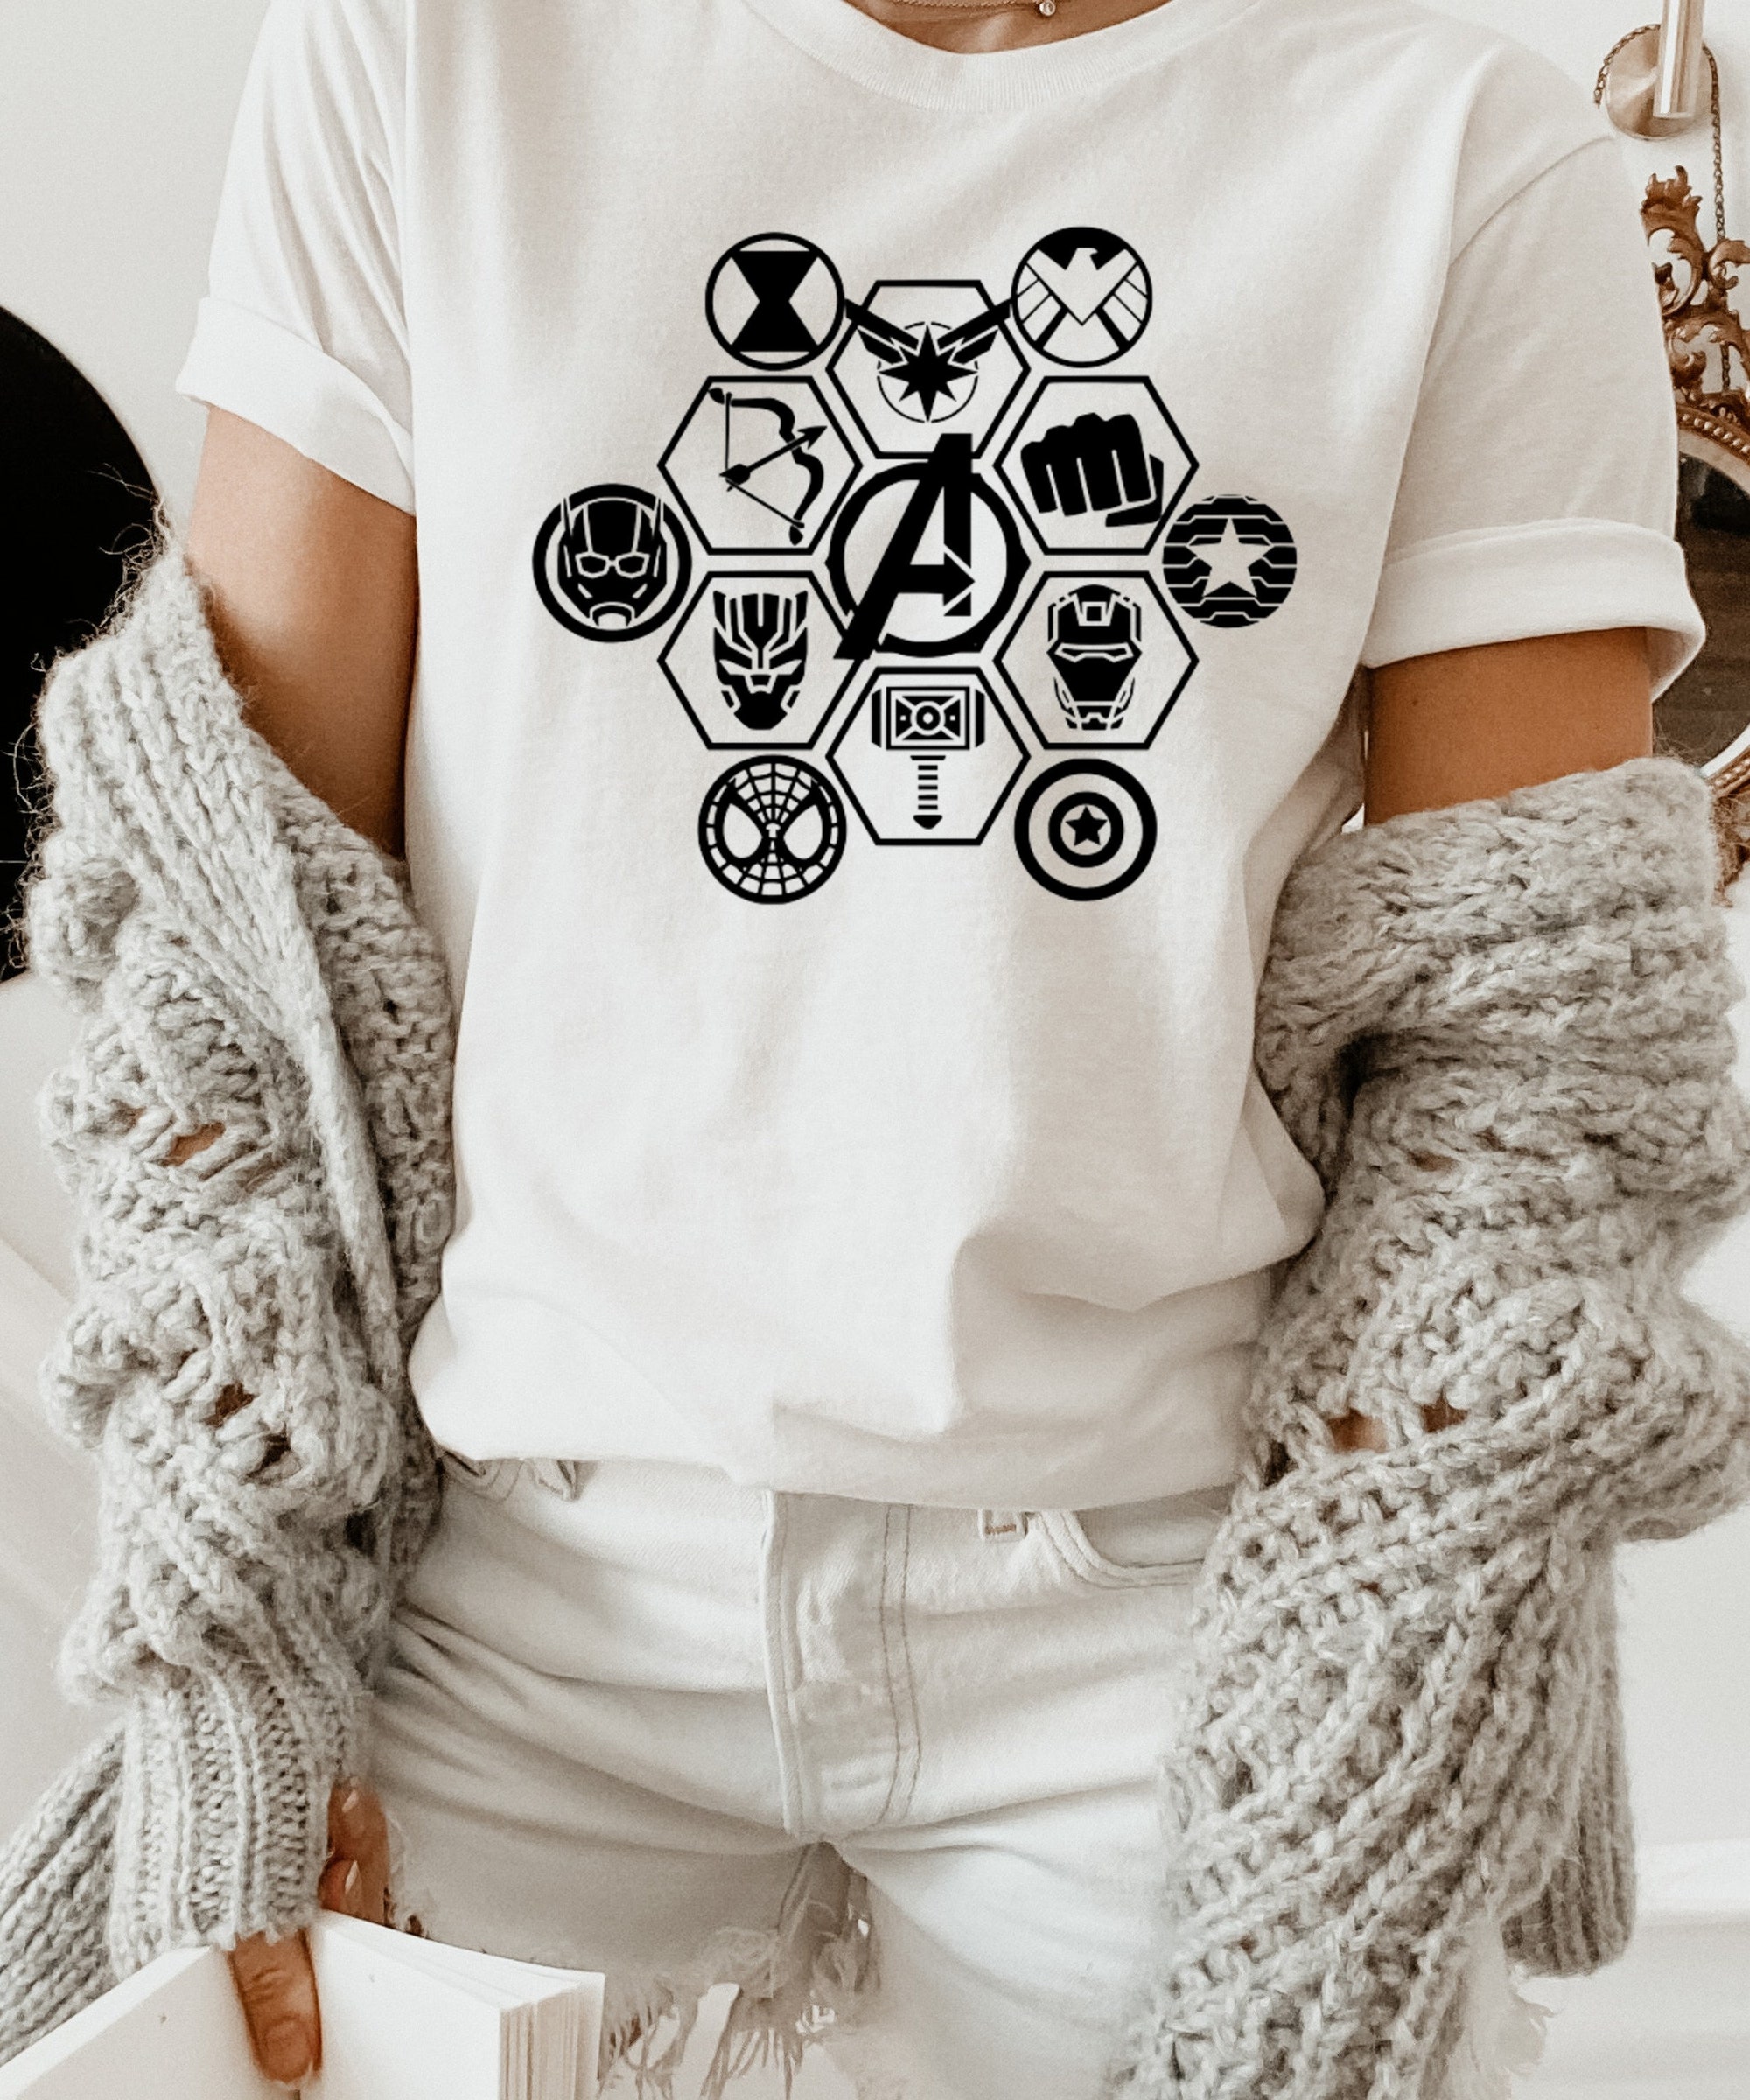 Discover Marvel Avengers Iron Man T-Shirt